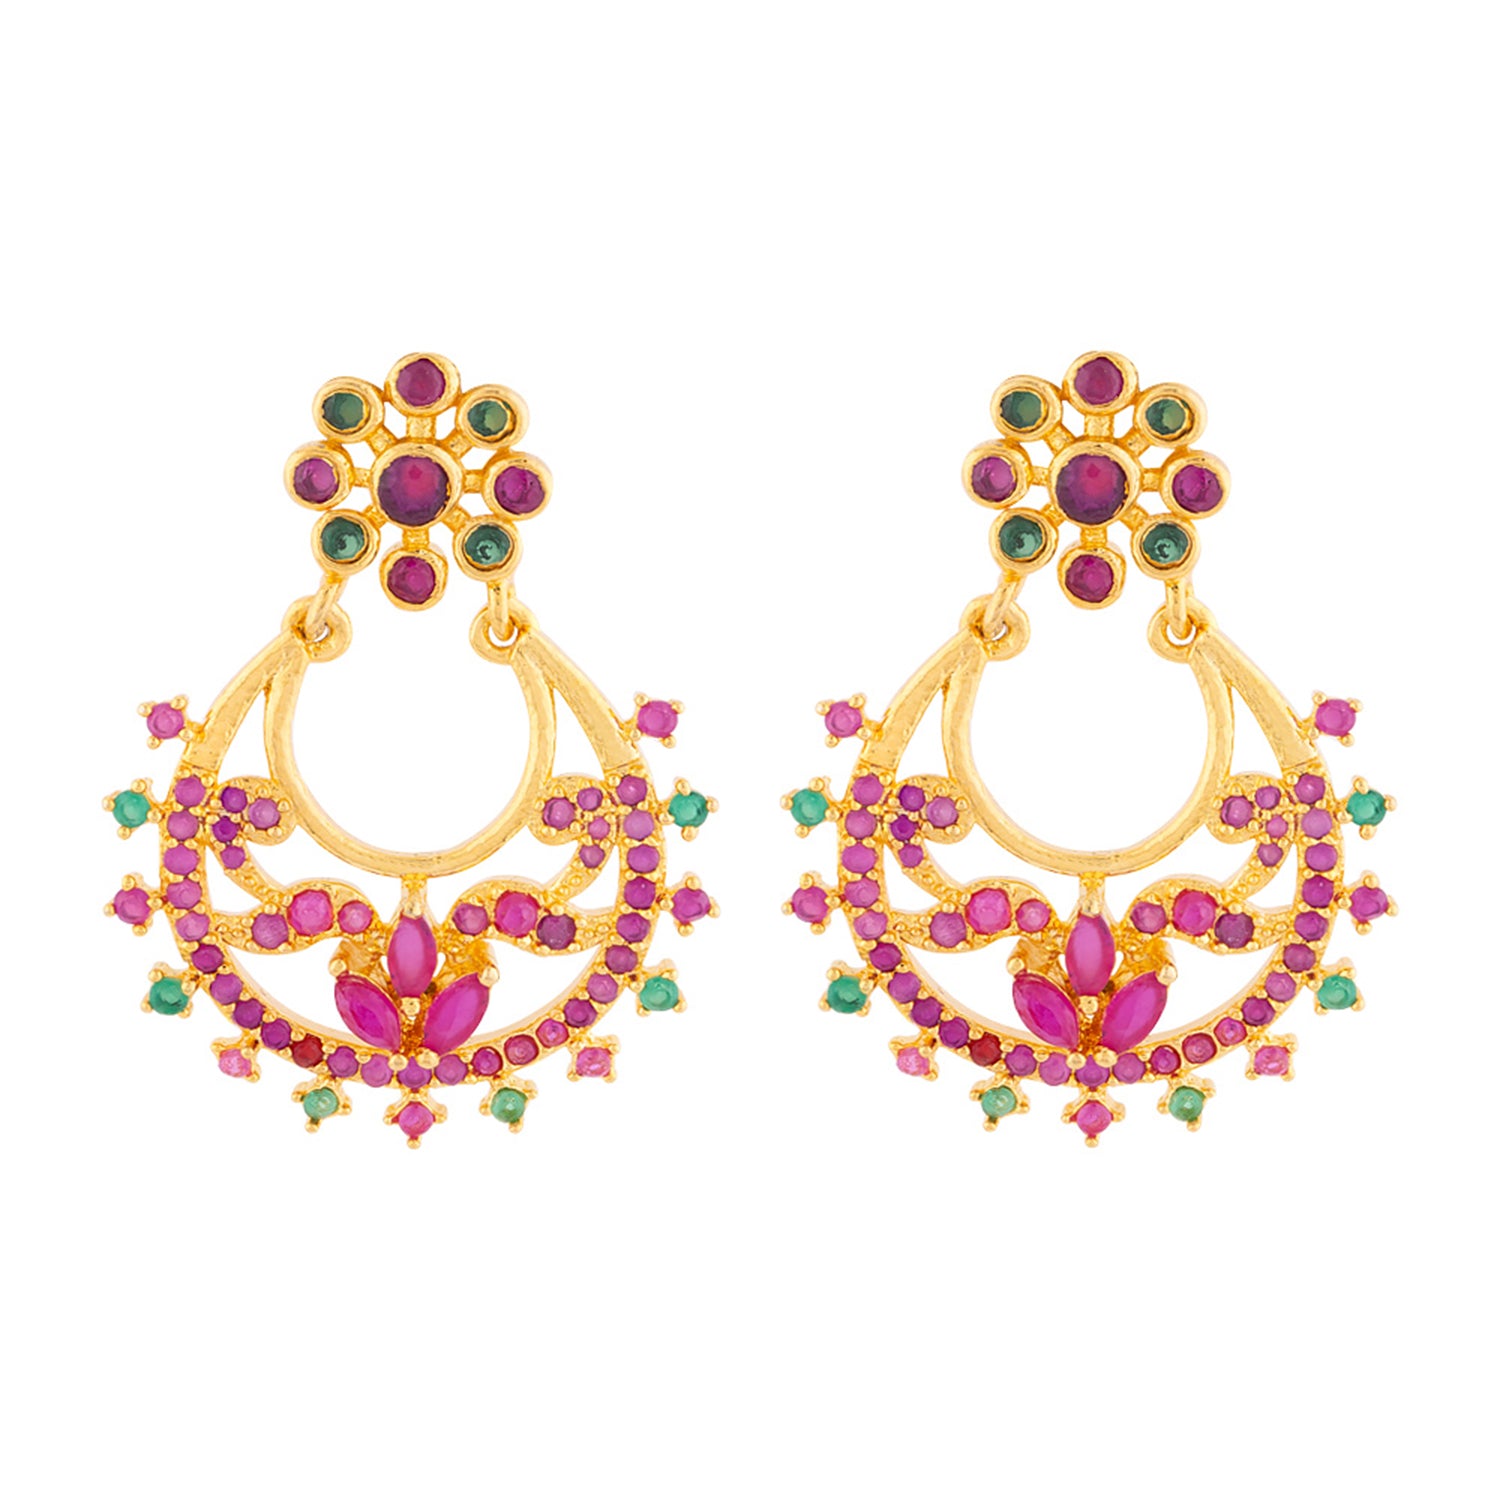 Chandbali CZ Gems Adorned Earrings